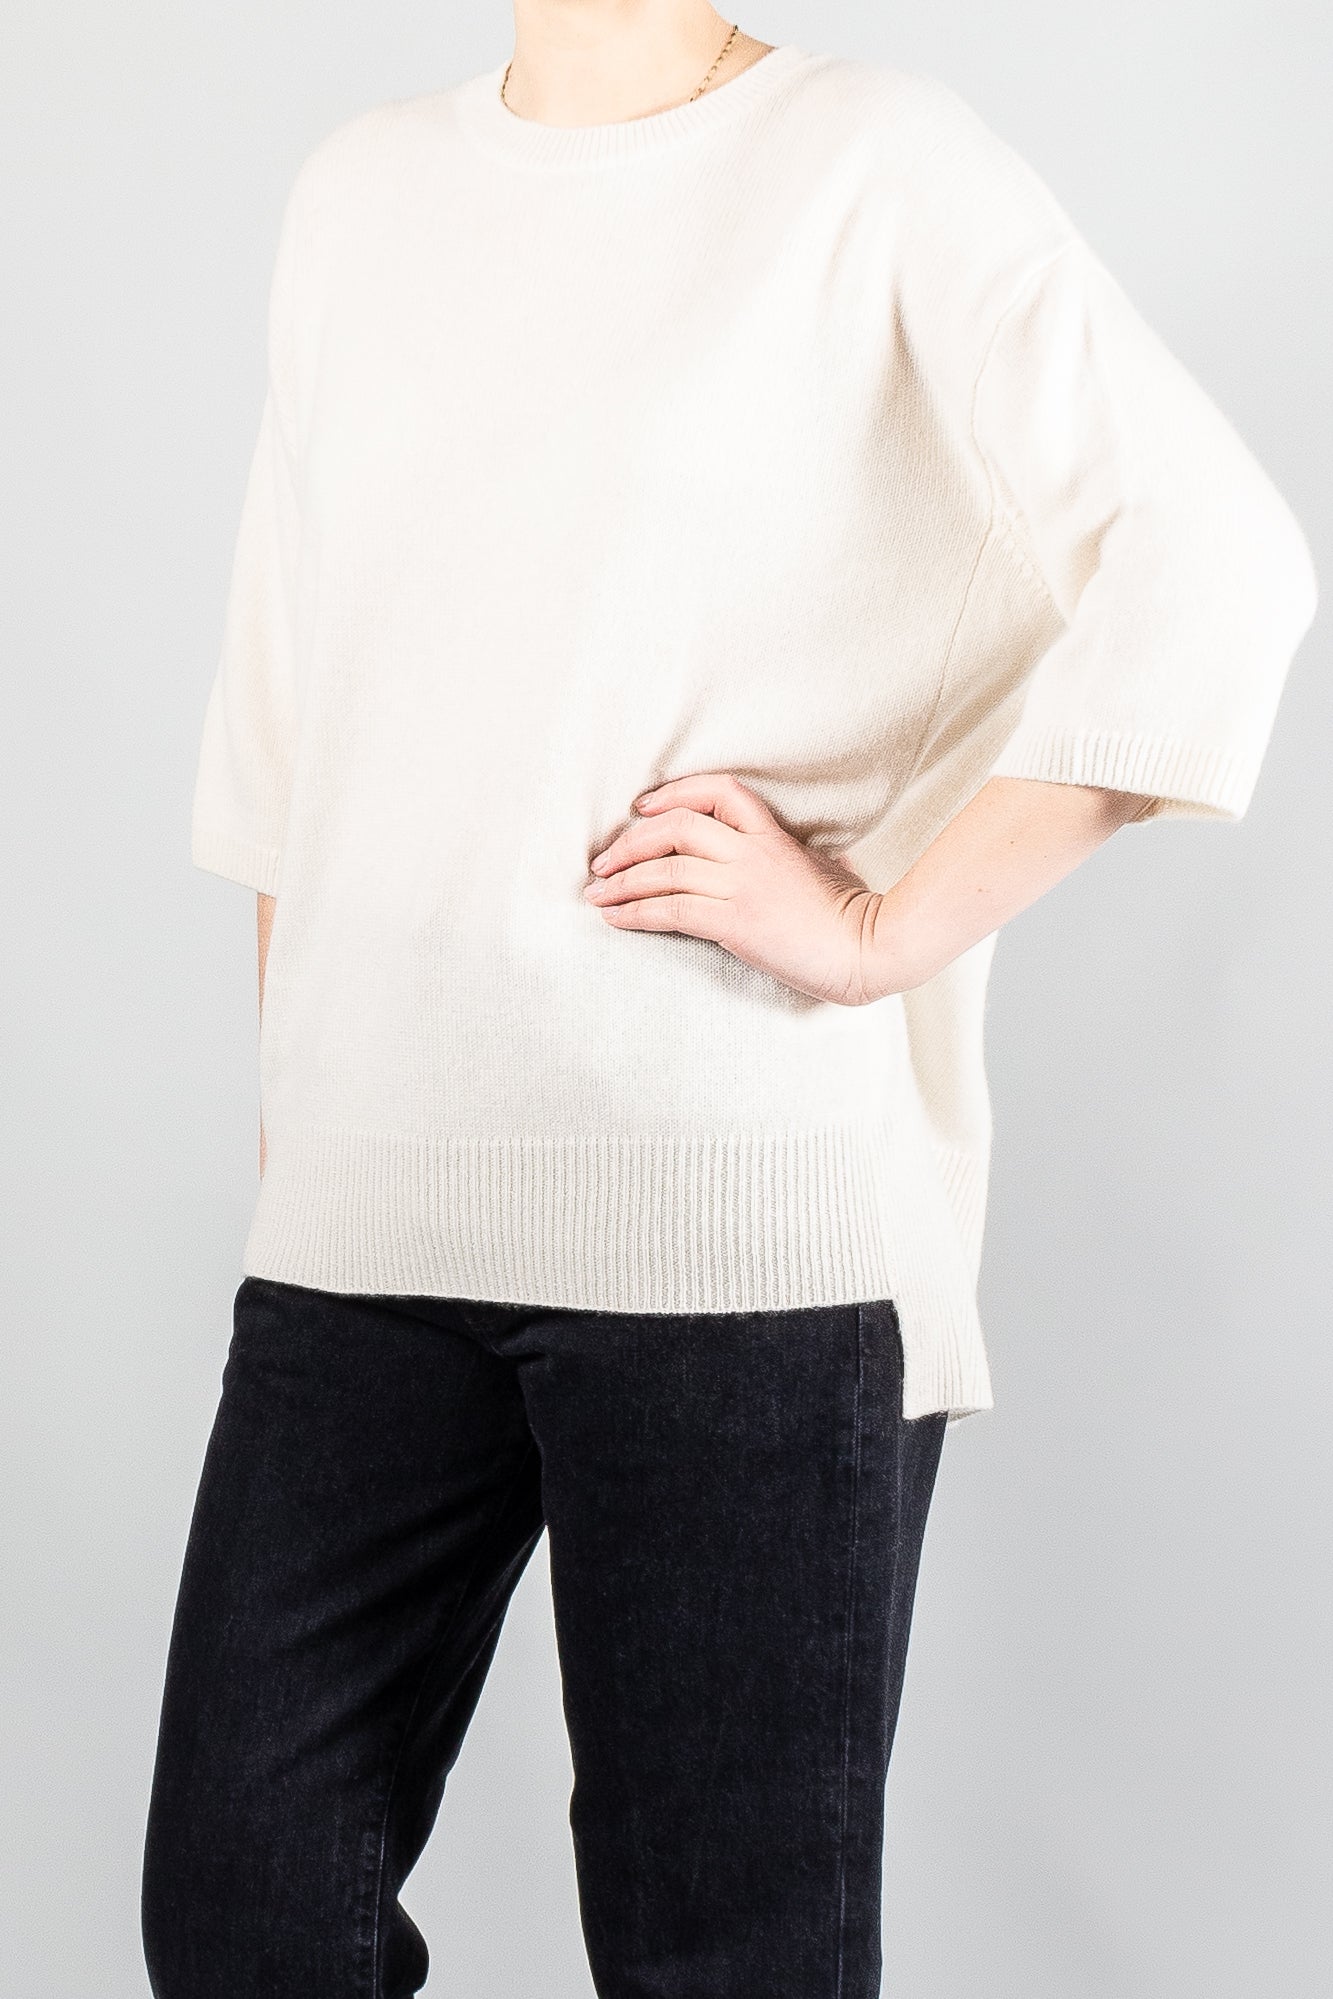 Lisa Yang Camille Sweater